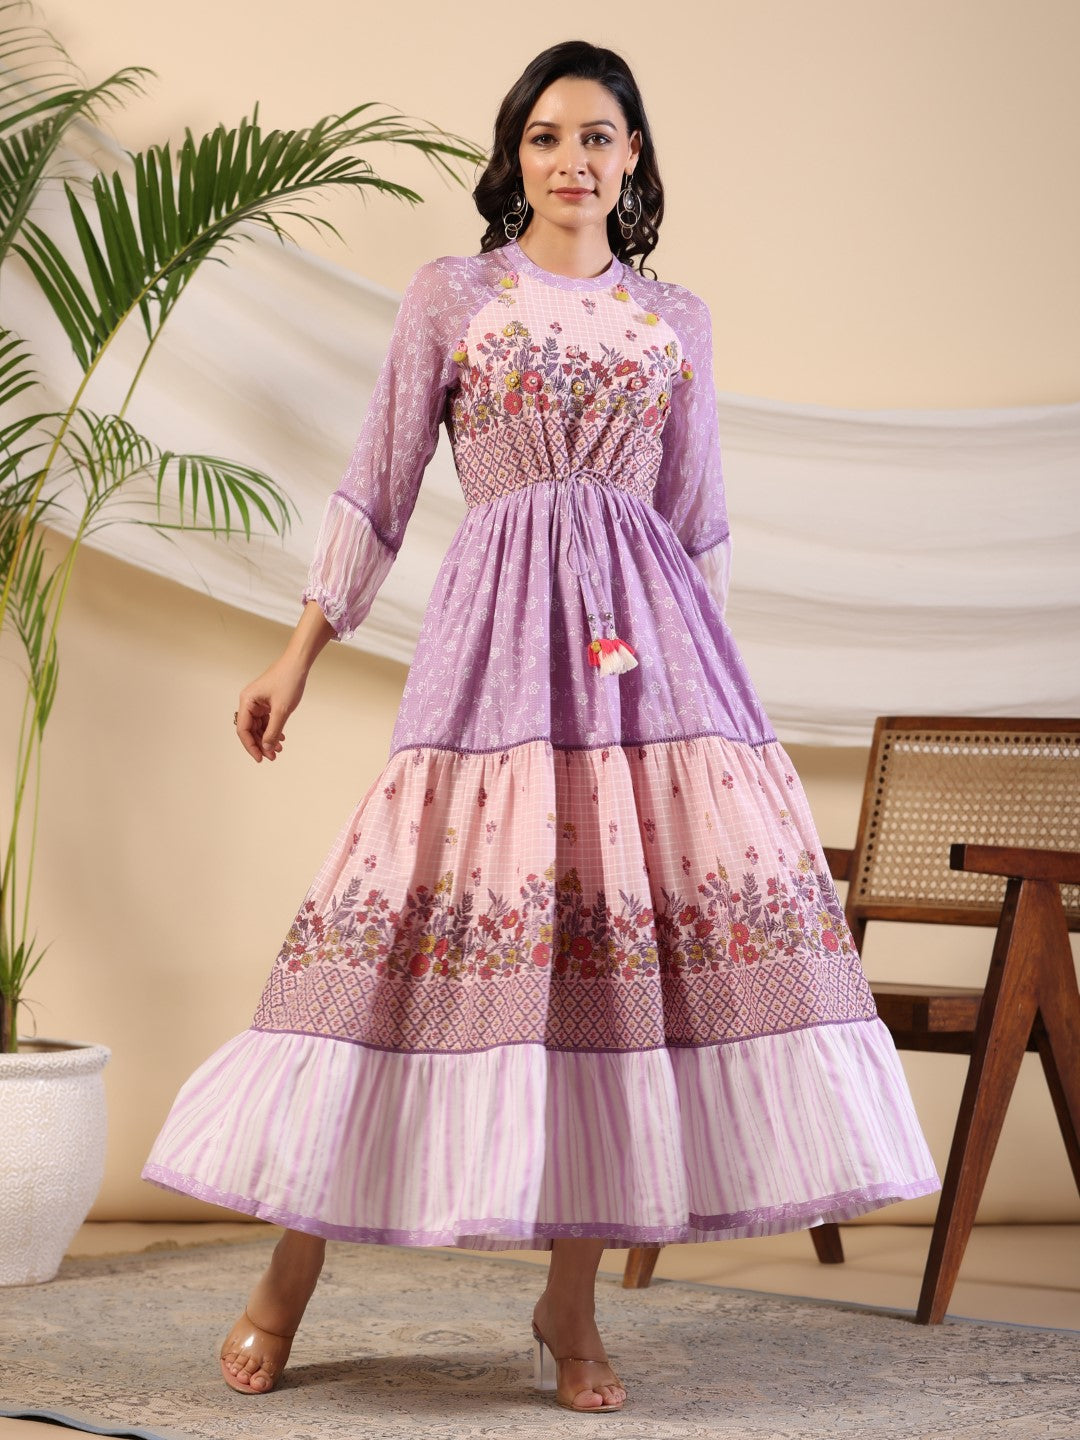 Juniper Purple Wonderland Cotton & Chiffon Floral Printed Tiered Maxi Dress With Lace & 3D Handwork